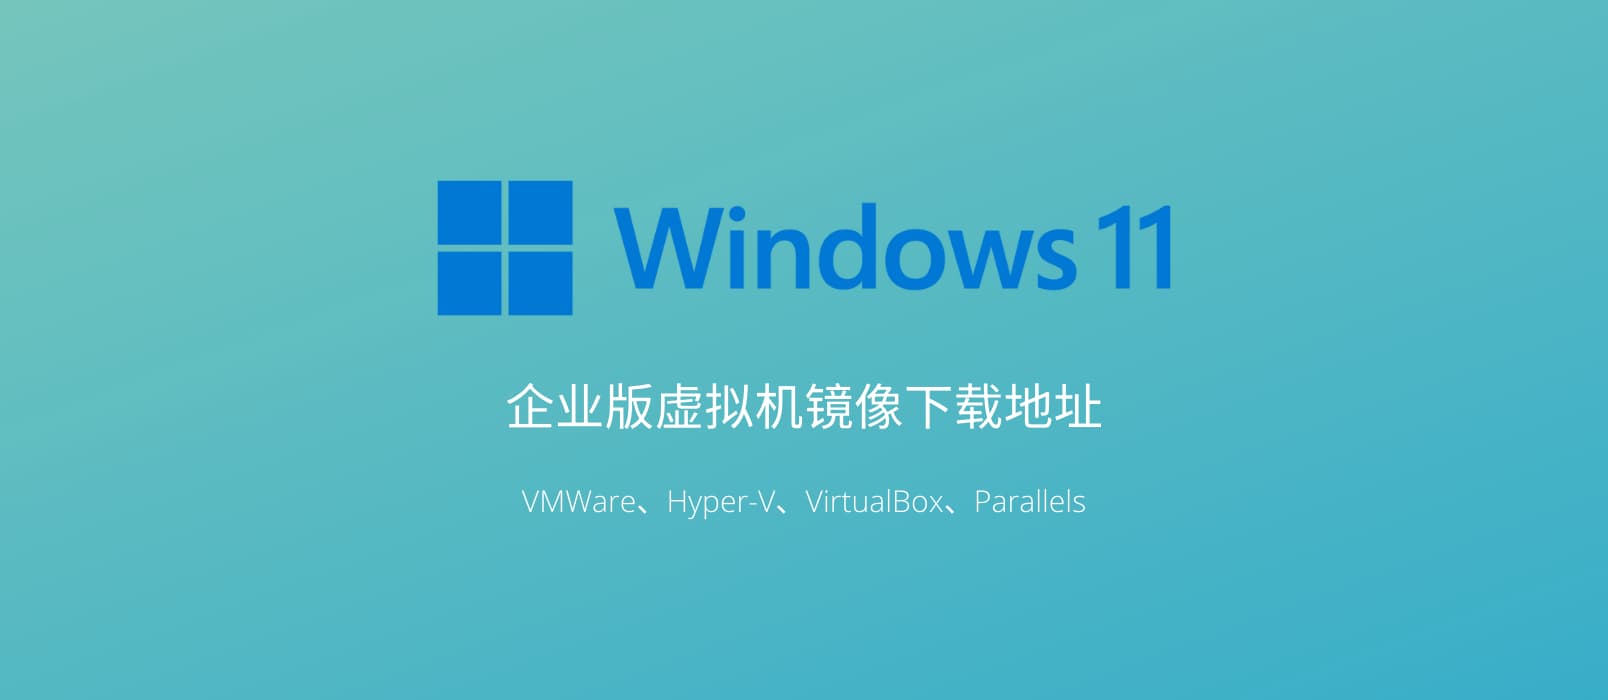 Windows 11 企业版虚拟机镜像文件下载地址，支持 VMWare、Hyper-V、VirtualBox、Parallels